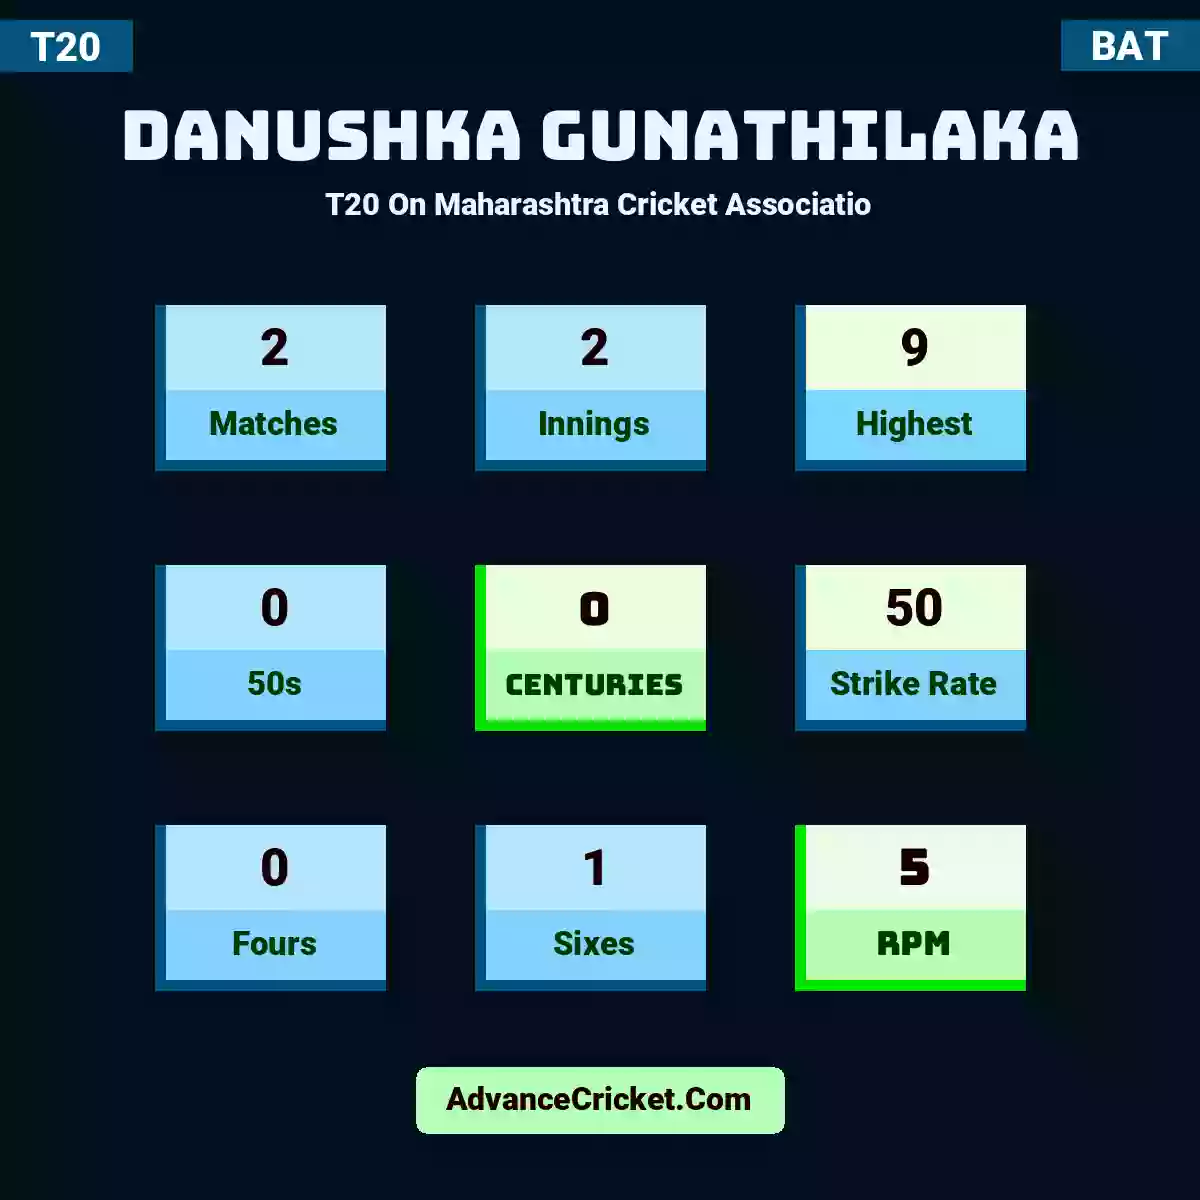 Danushka Gunathilaka T20  On Maharashtra Cricket Associatio, Danushka Gunathilaka played 2 matches, scored 9 runs as highest, 0 half-centuries, and 0 centuries, with a strike rate of 50. D.Gunathilaka hit 0 fours and 1 sixes, with an RPM of 5.